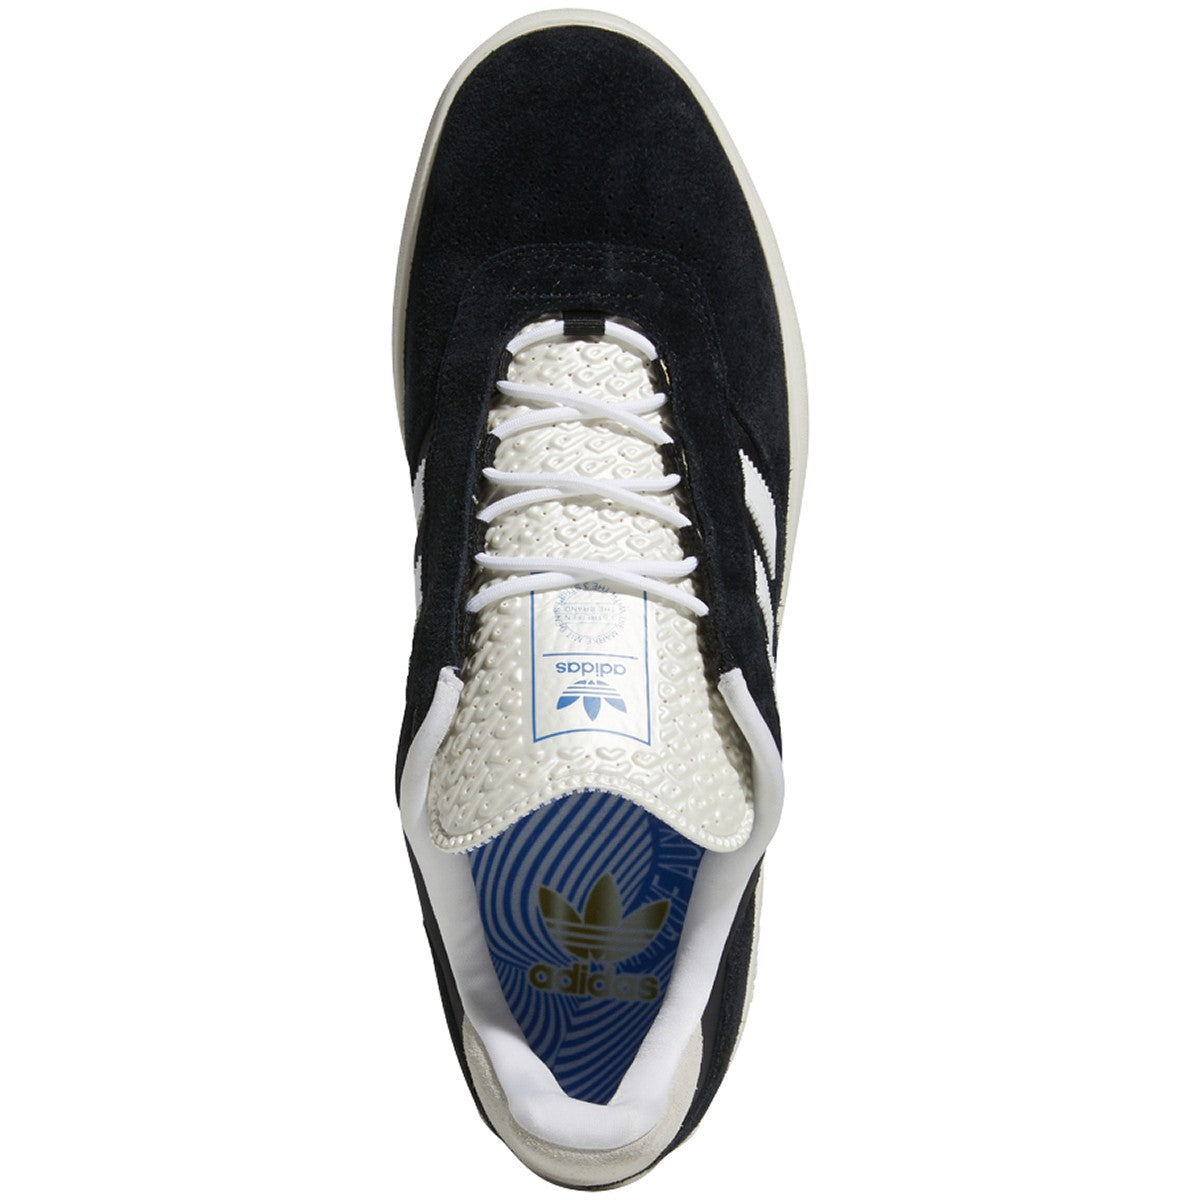 Adidas Puig Skateboard Shoe - Black/White/Bluebird